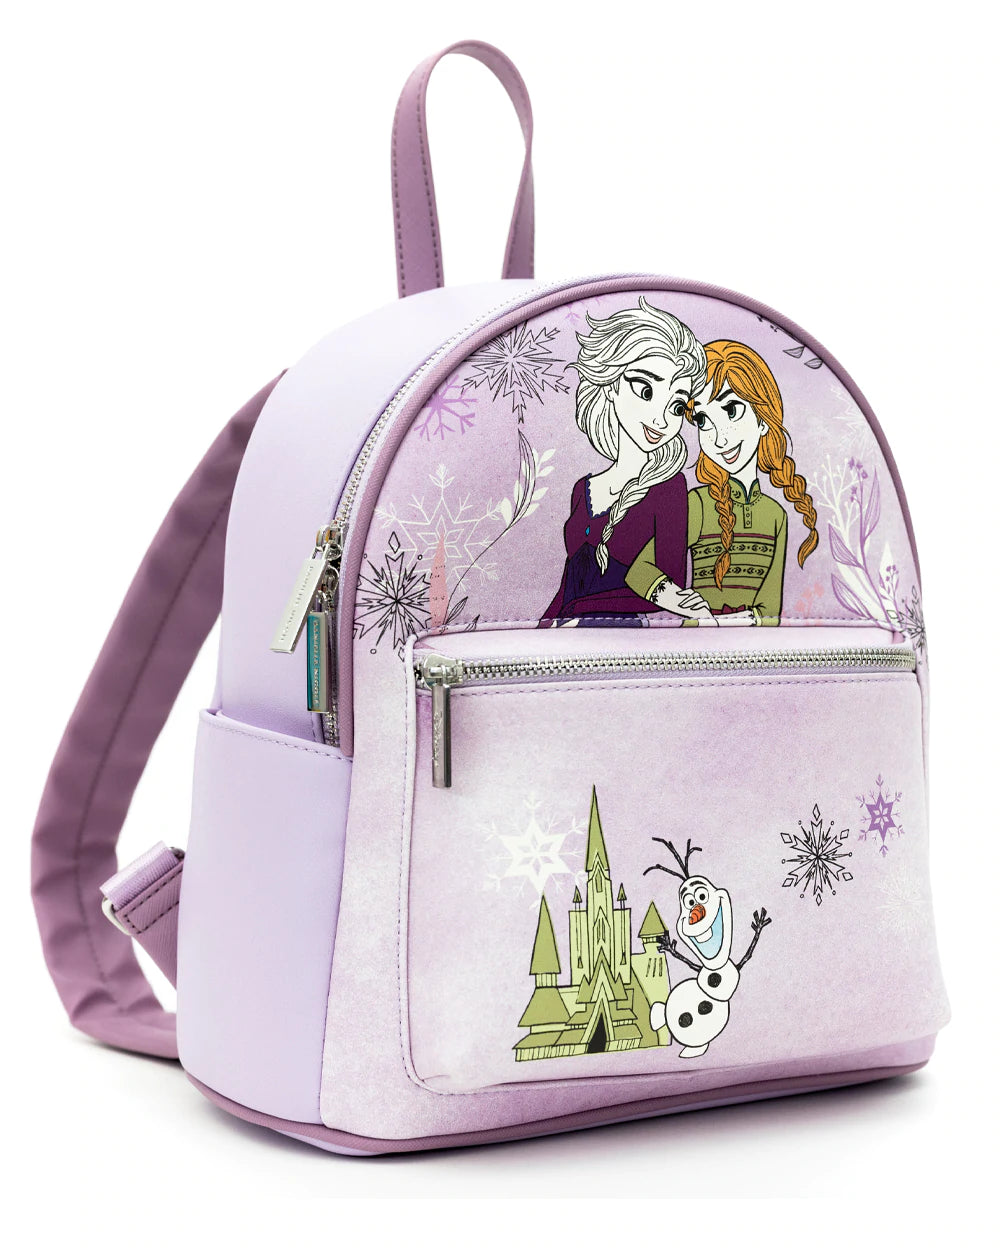 Danielle Nicole - Disney Frozen Mini Backpack